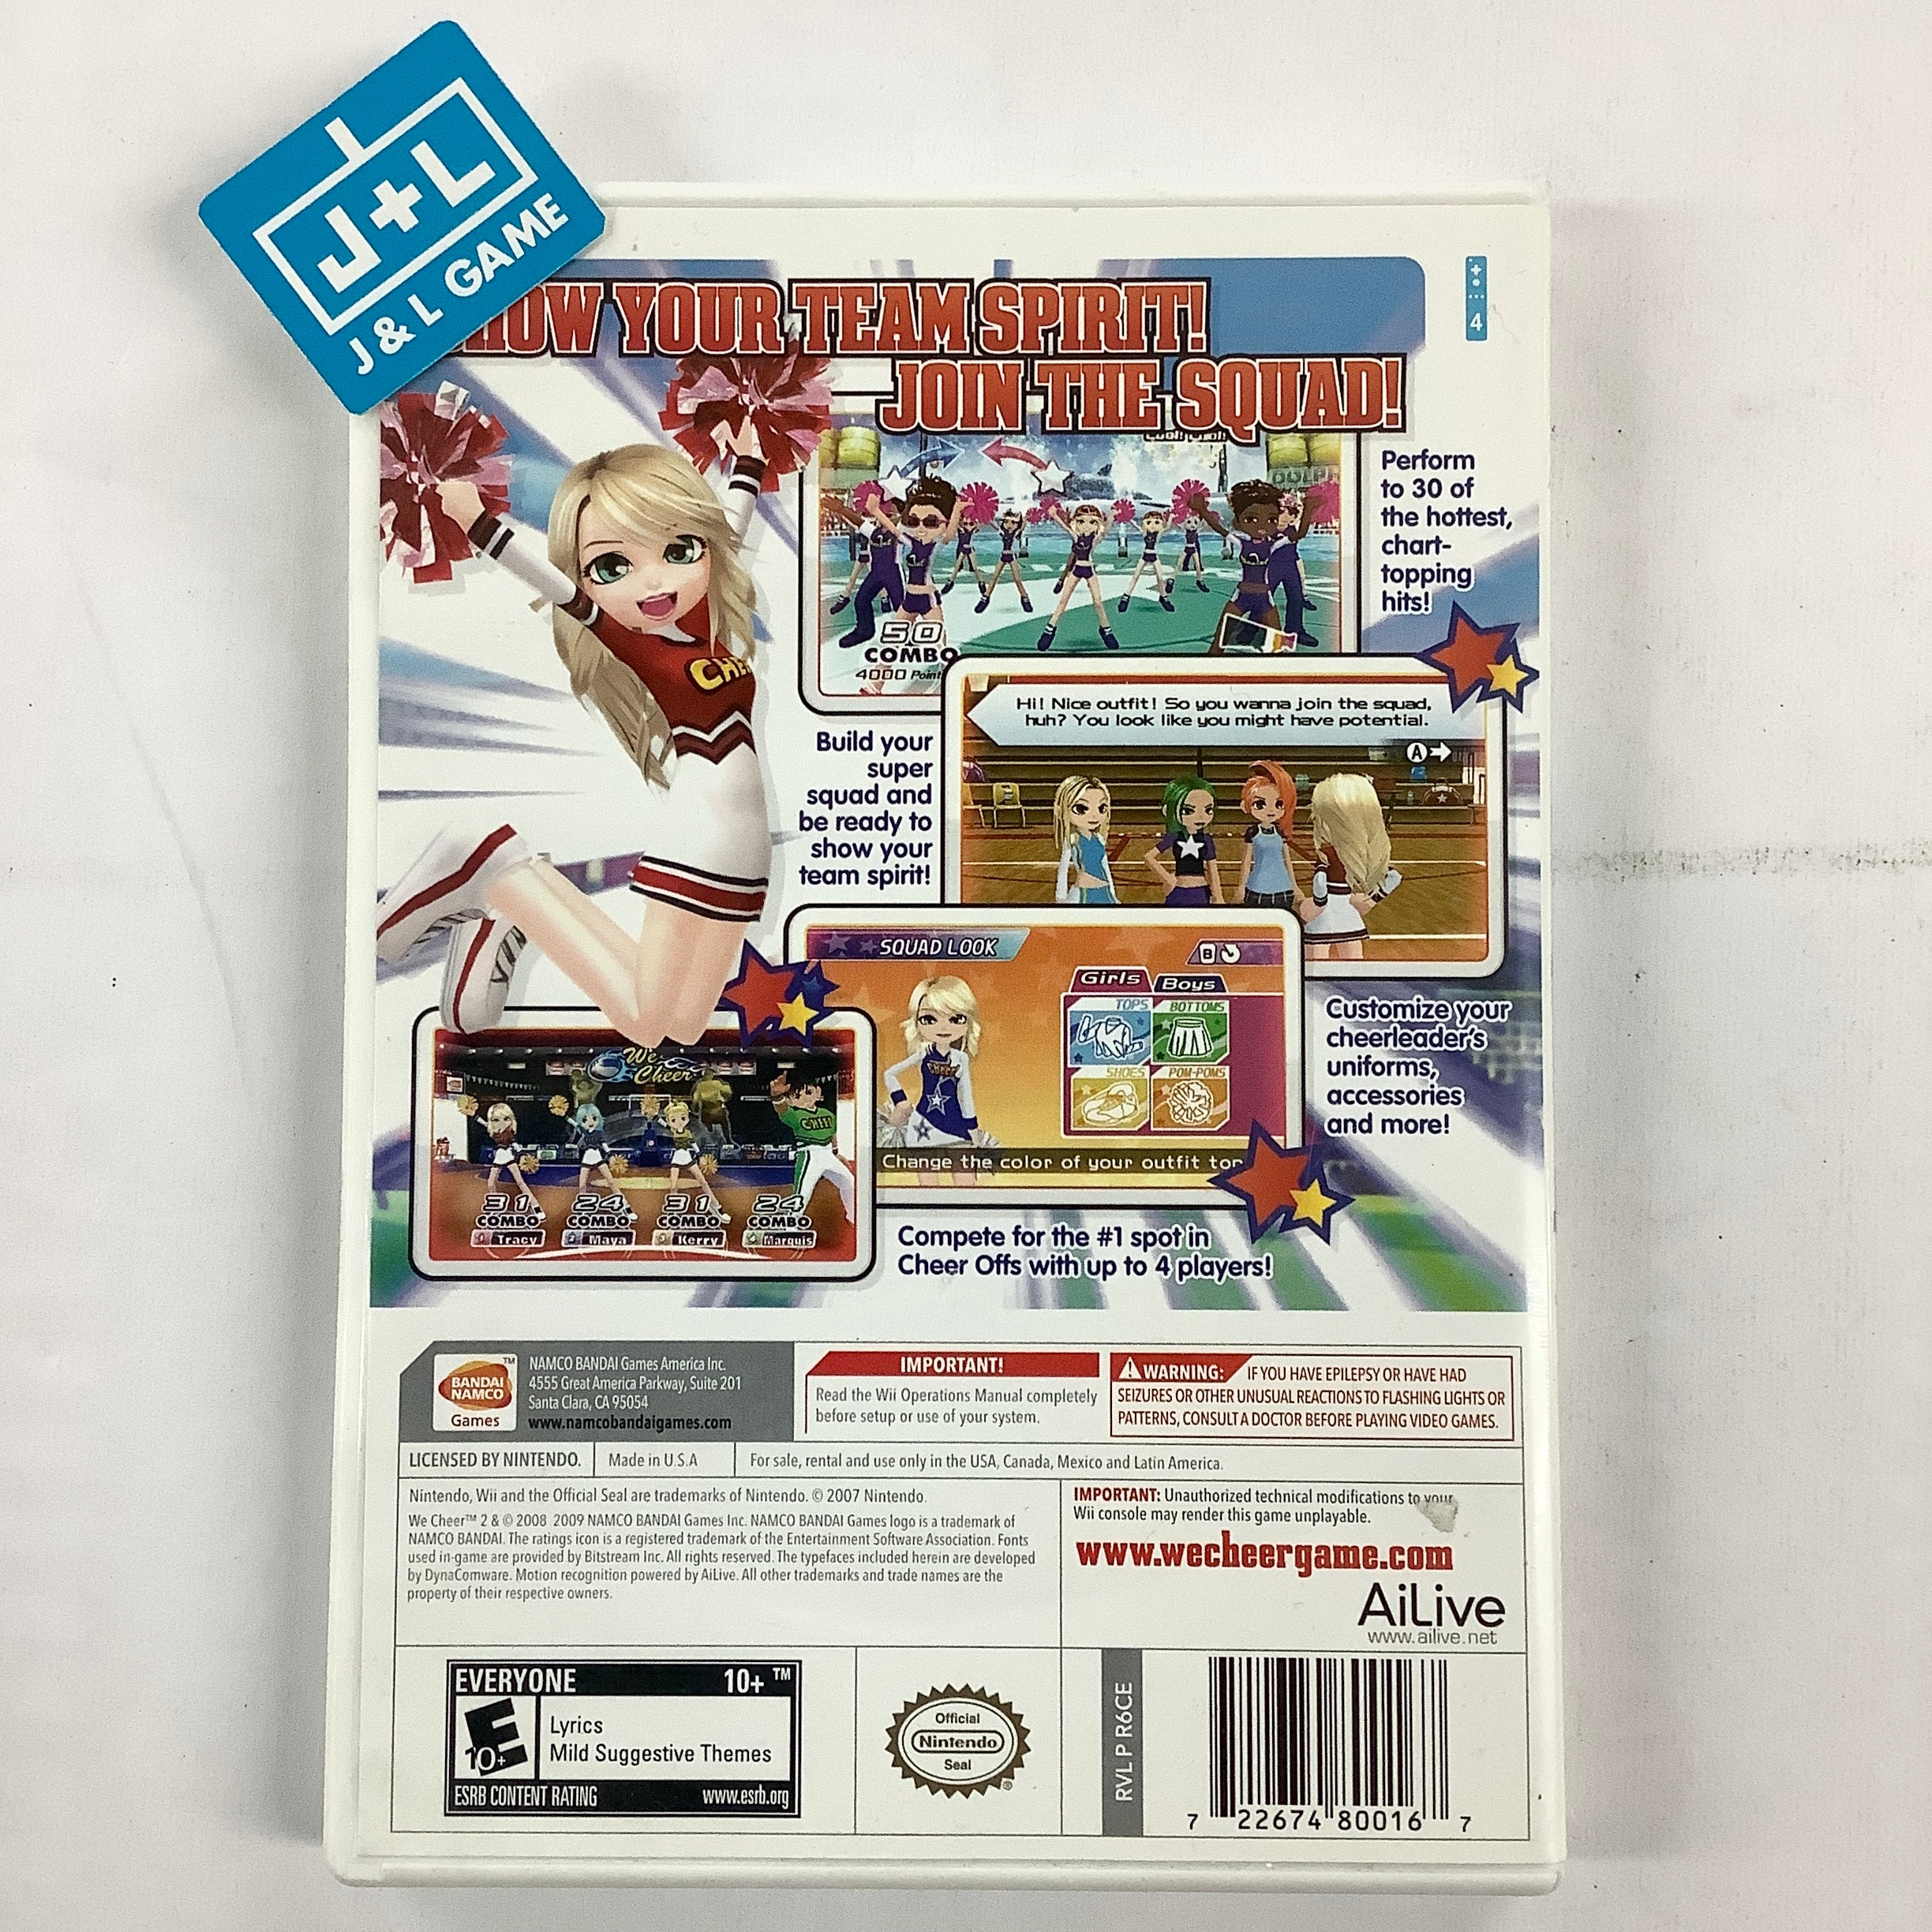 We Cheer 2 - Nintendo Wii [Pre-Owned] Video Games Namco Bandai Games   